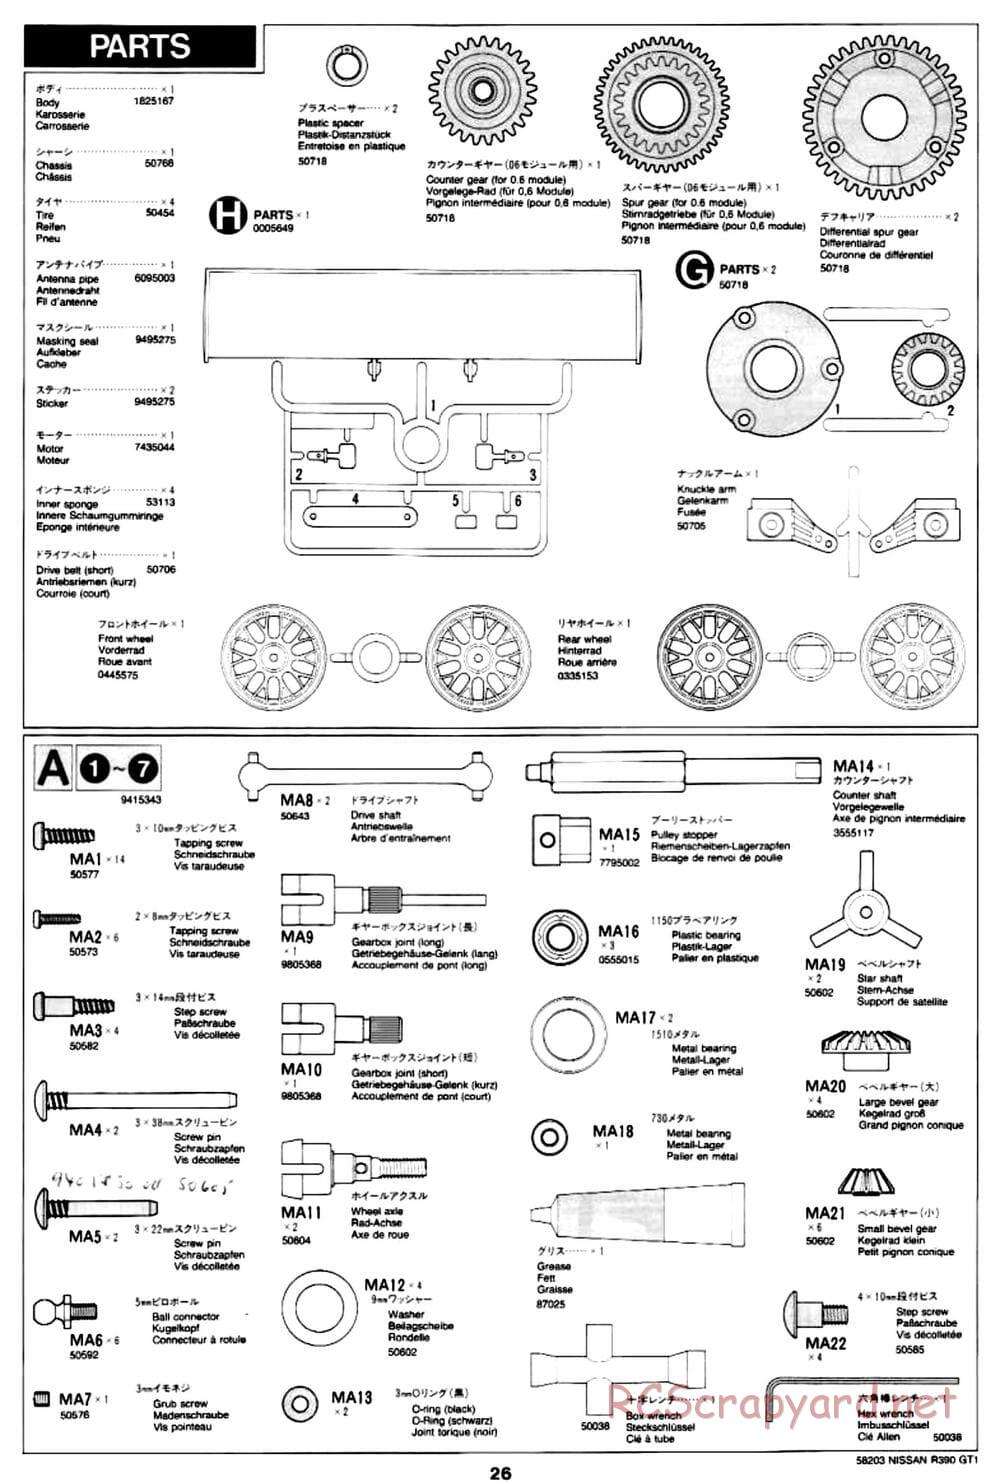 Tamiya - Nissan R390 GT1 - TA-03R Chassis - Manual - Page 26